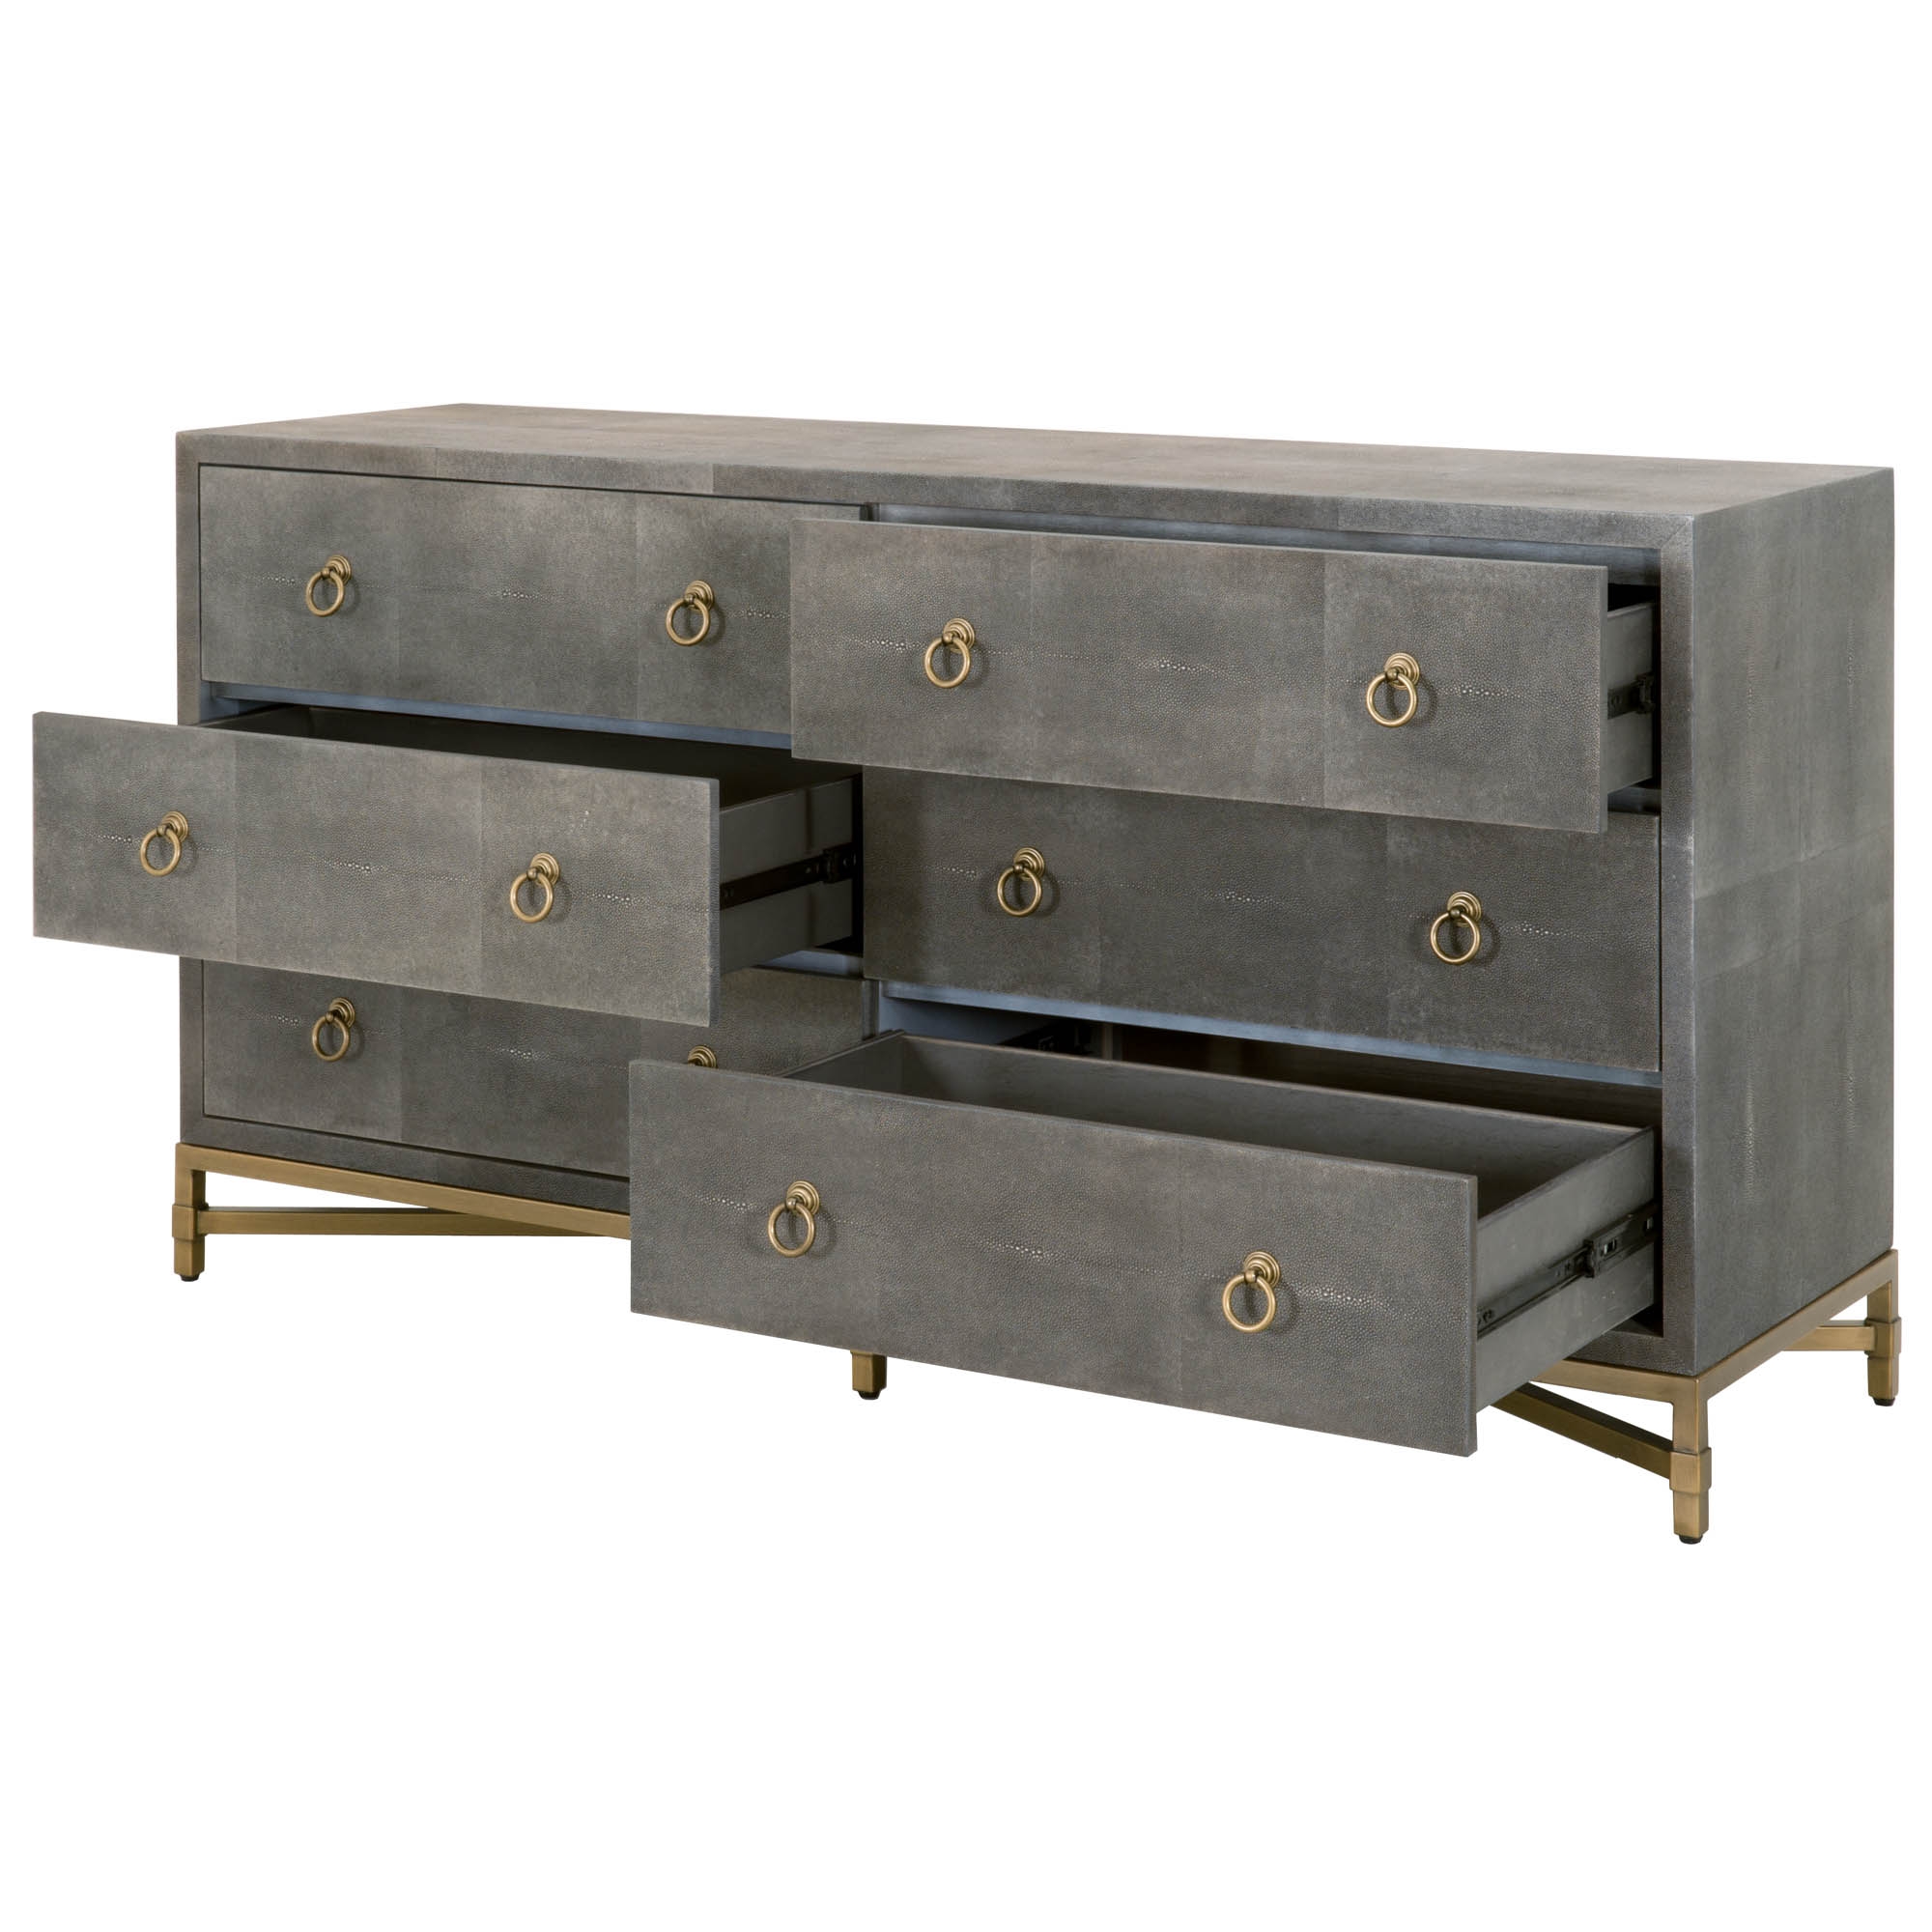 Colette Shagreen 6-Drawer Double Dresser, Gray - Image 3